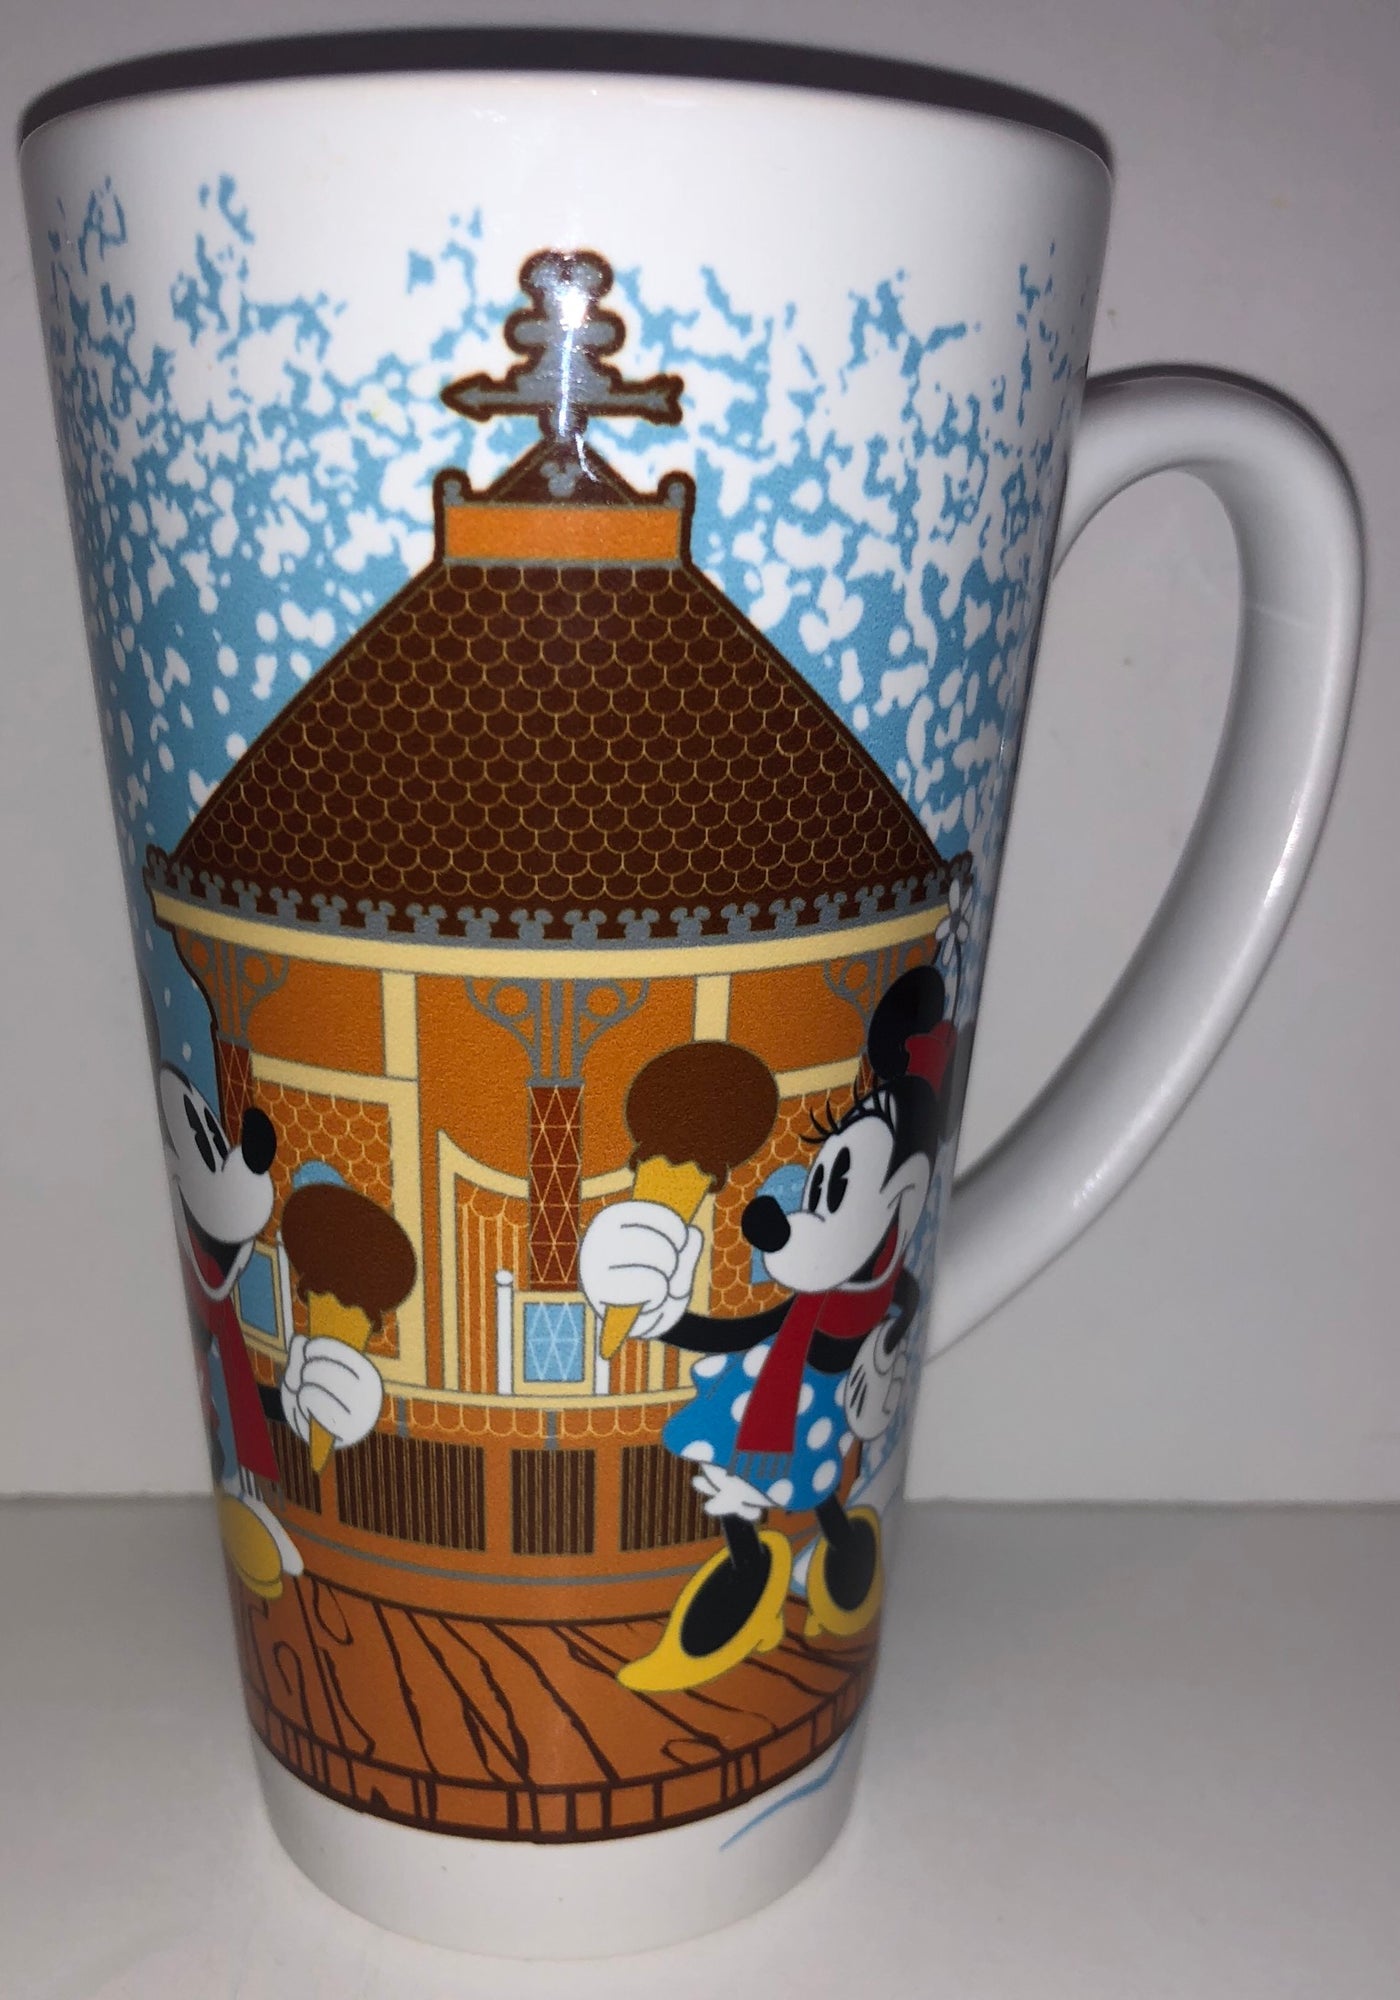 Disney 2018 Mickey Minnie Broadwalk Resort Holiday Celebration Tall Mug New